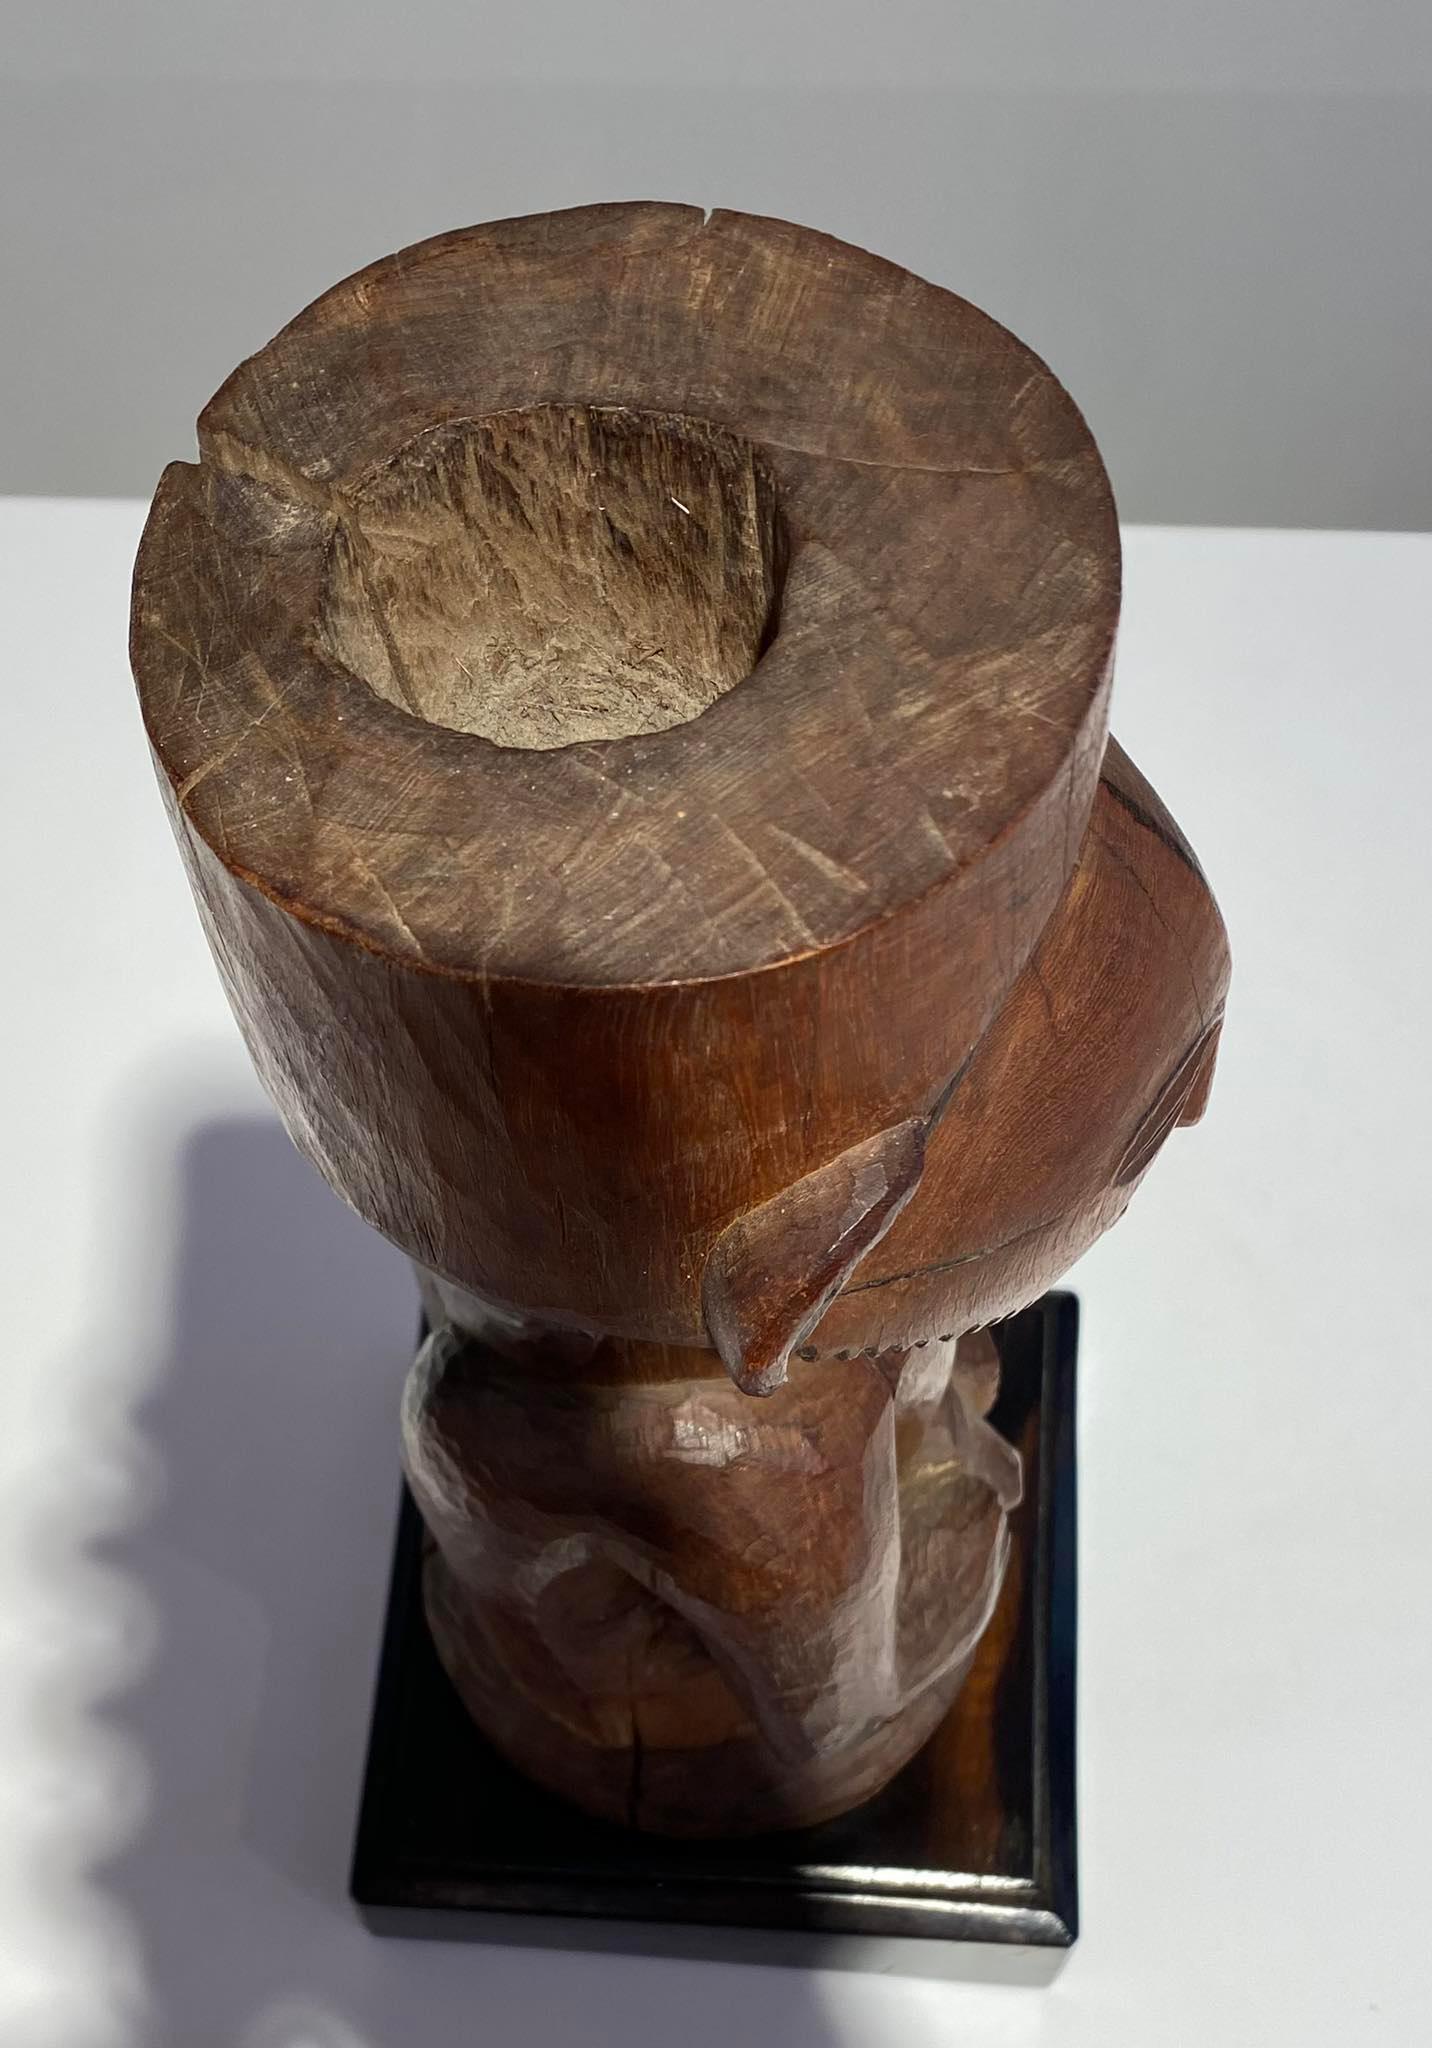 Kusu wooden ancestor fetish ca 1900 DR Congo Africa Central African Tribal Art For Sale 7